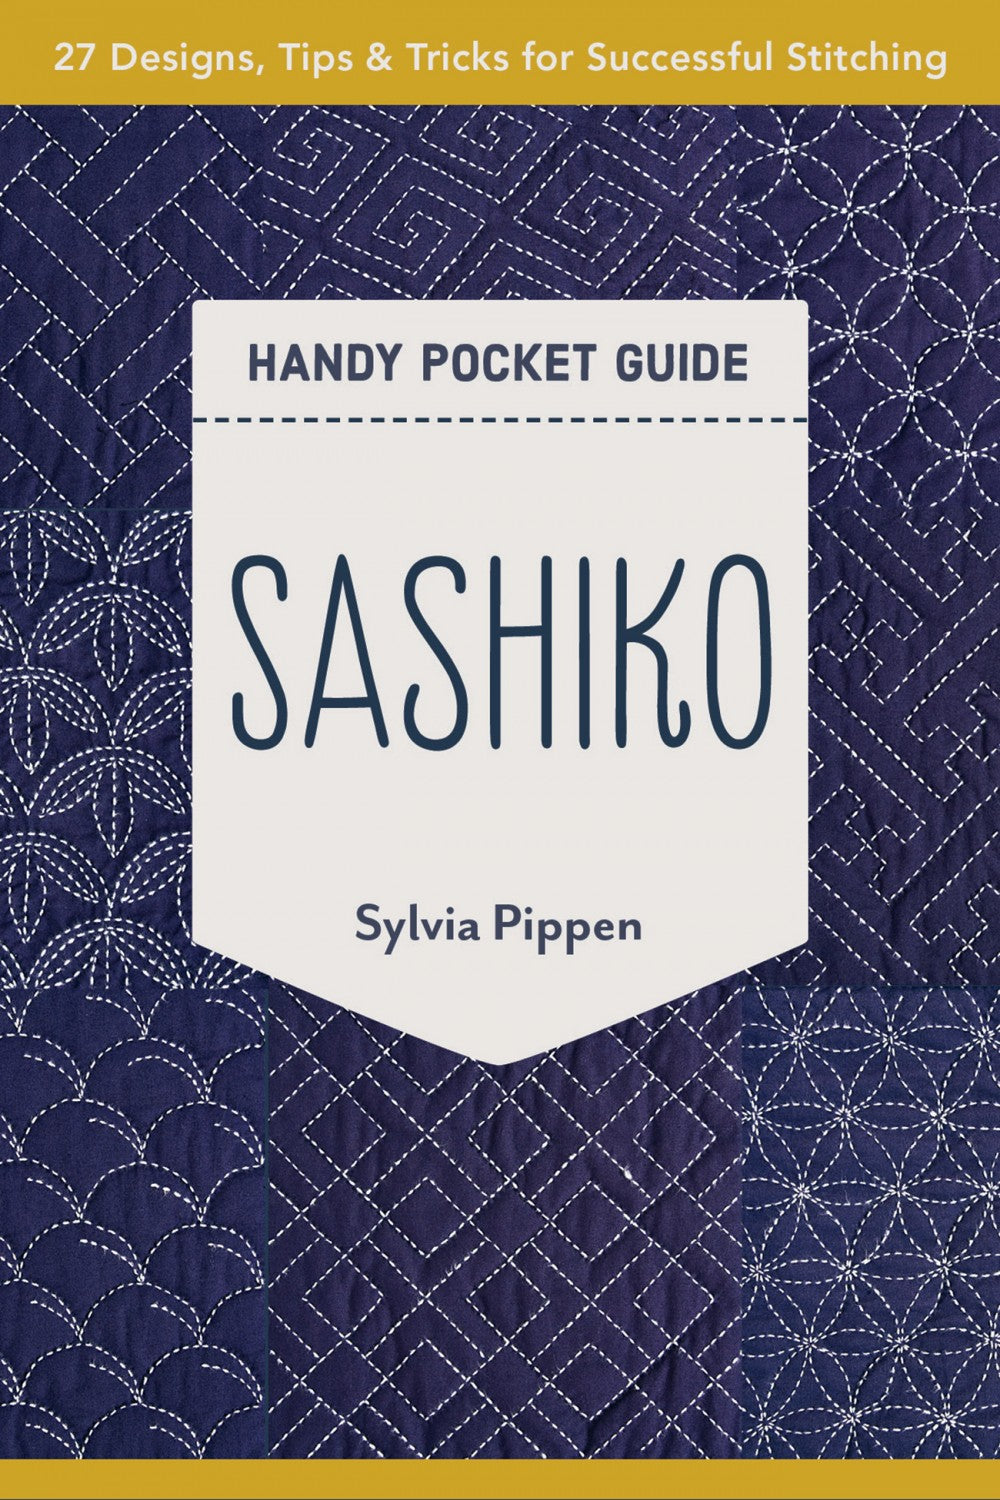 Handy Pocket Guide - Sashiko by Sylvia Pippen